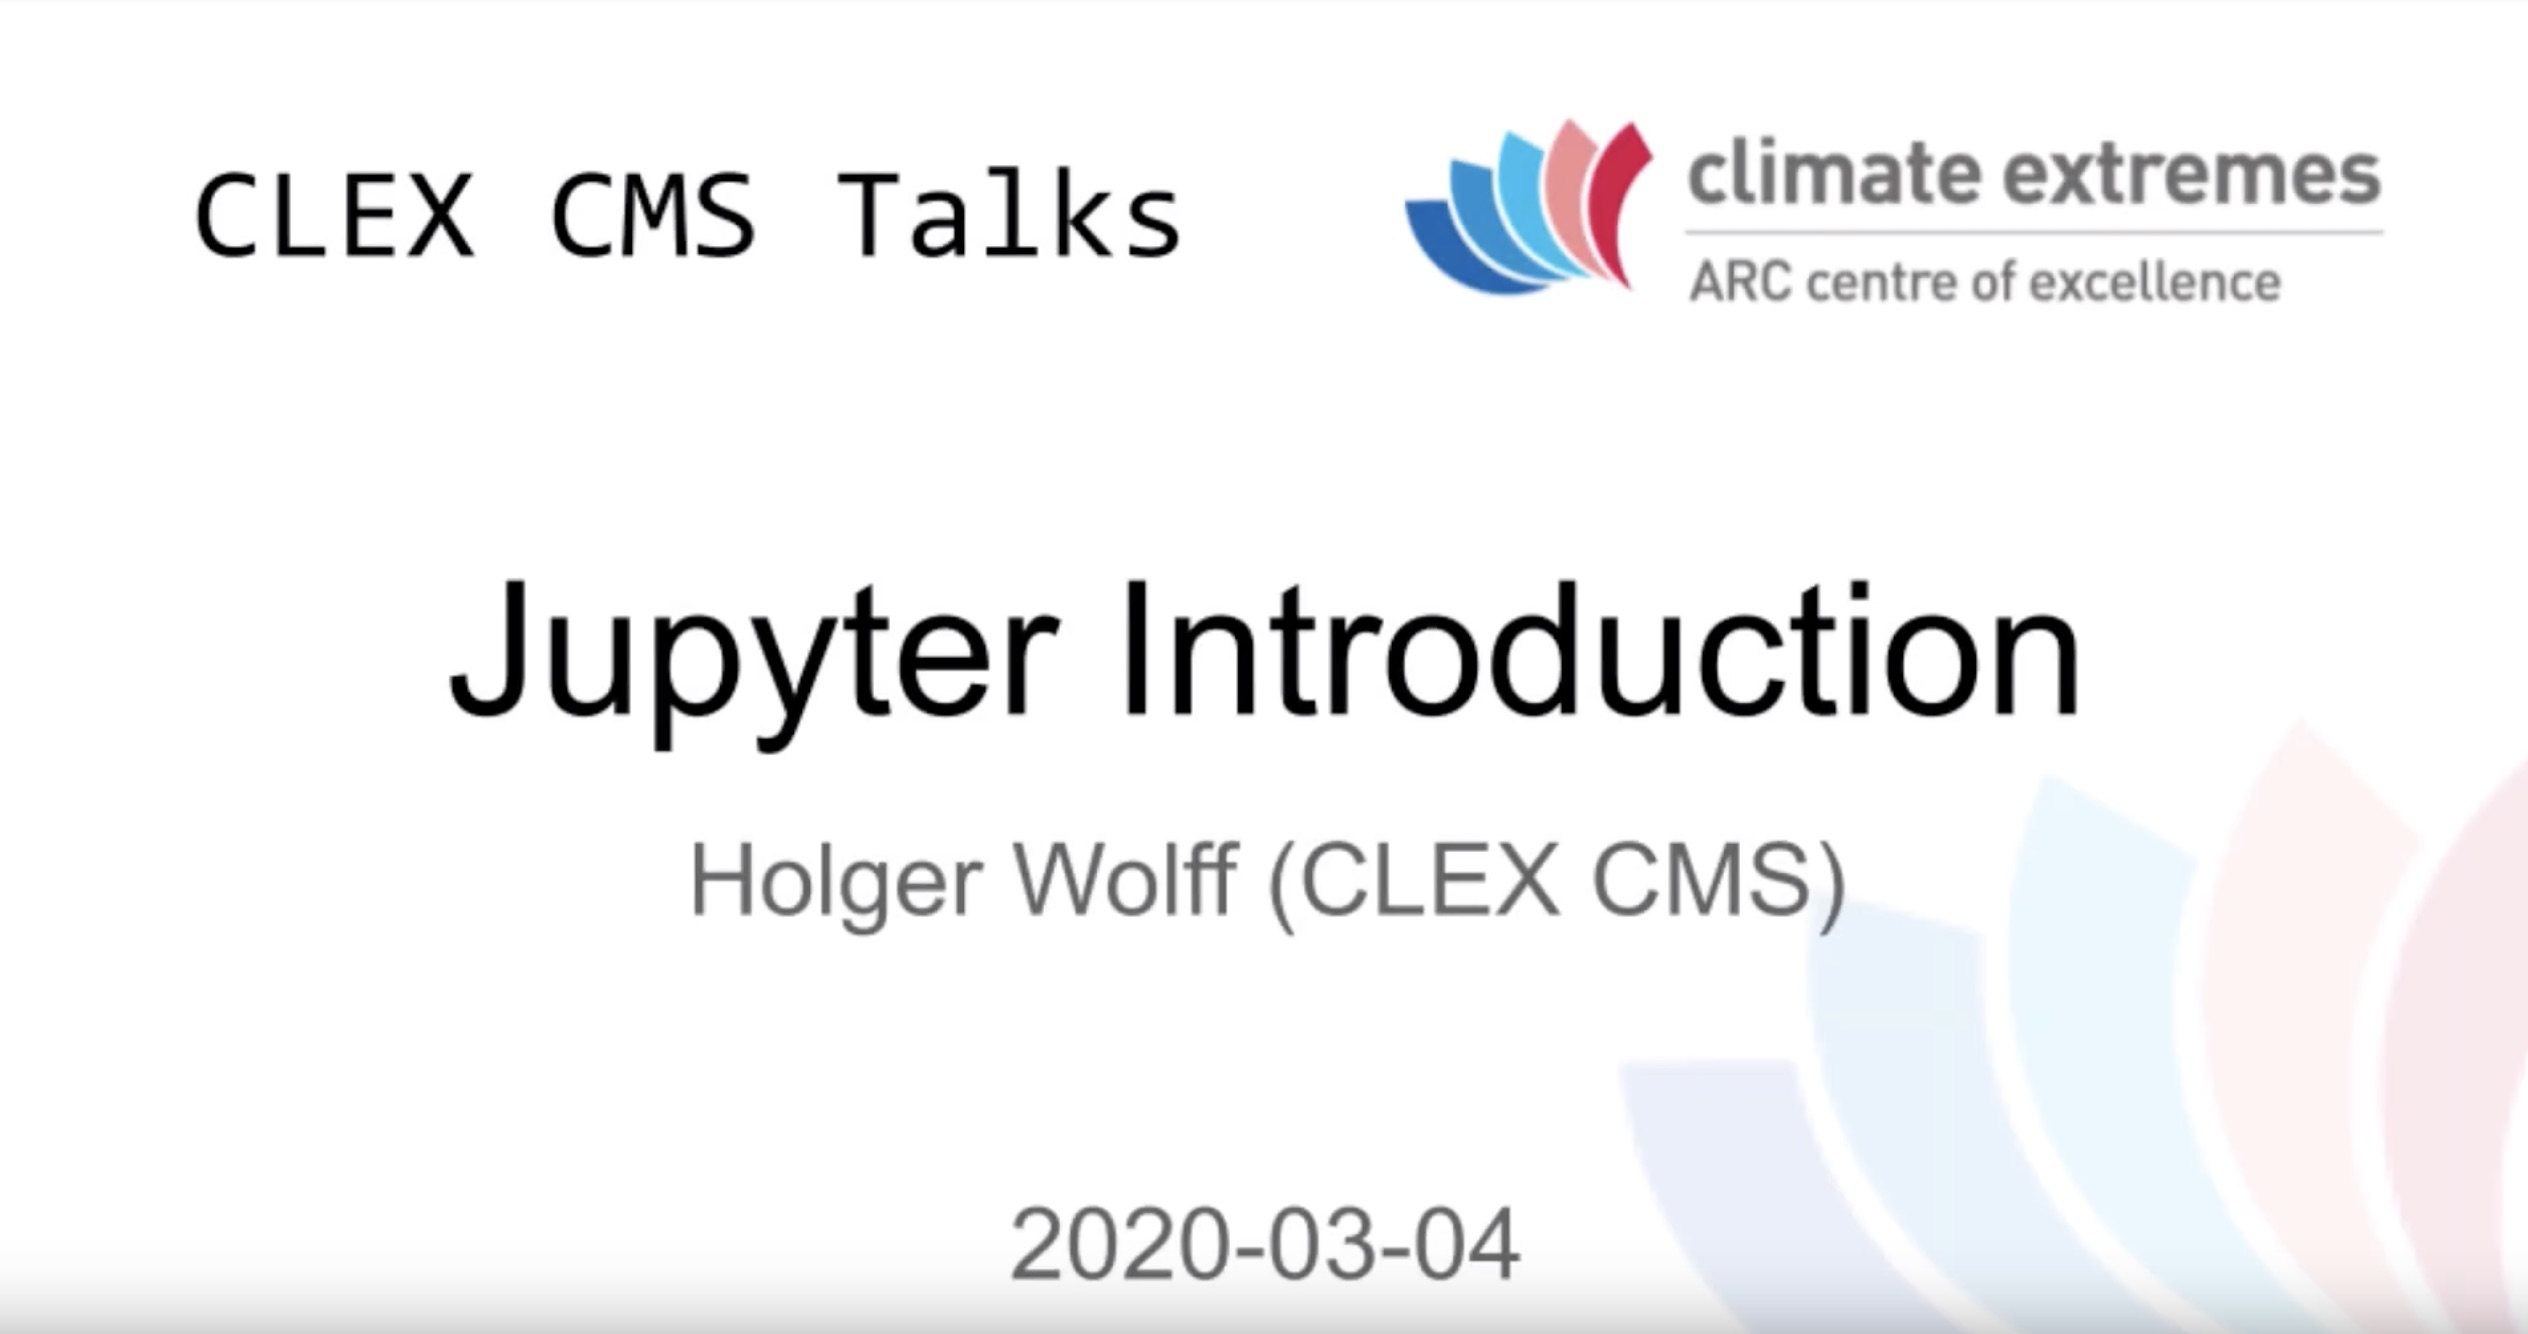 CMS talks: Jupyter Introduction